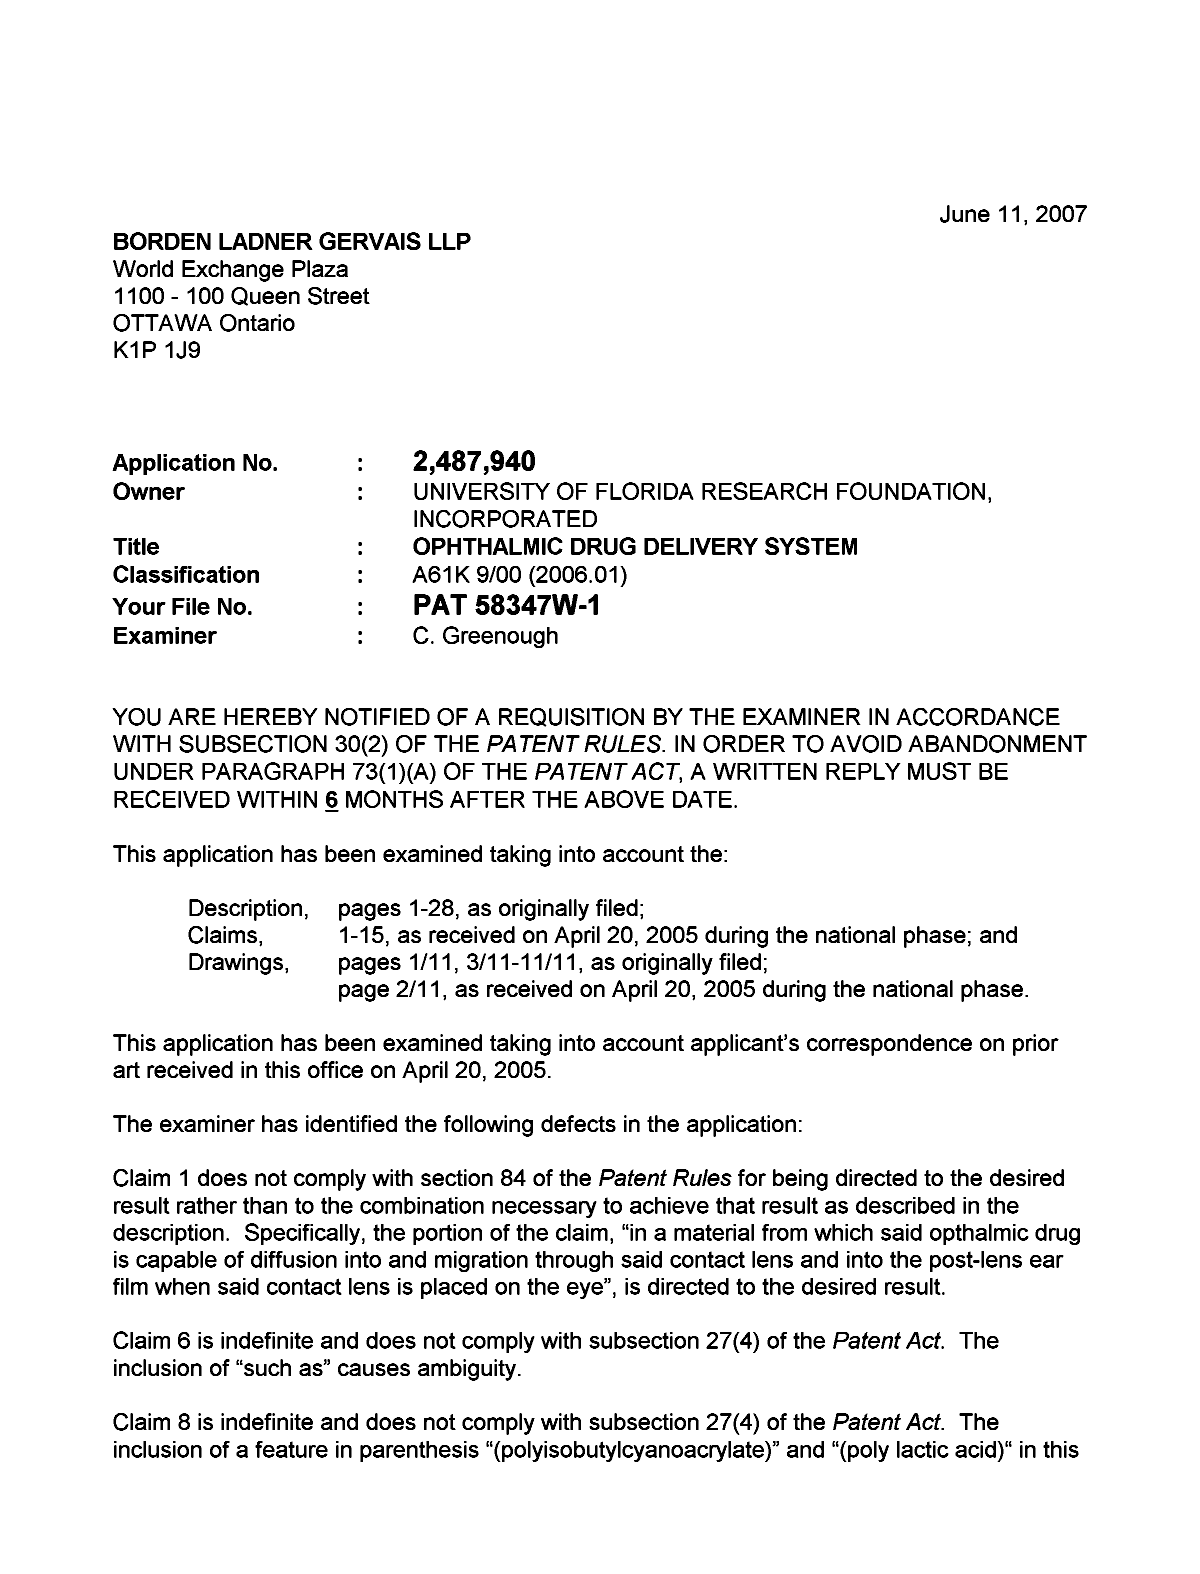 Canadian Patent Document 2487940. Prosecution-Amendment 20061211. Image 1 of 2